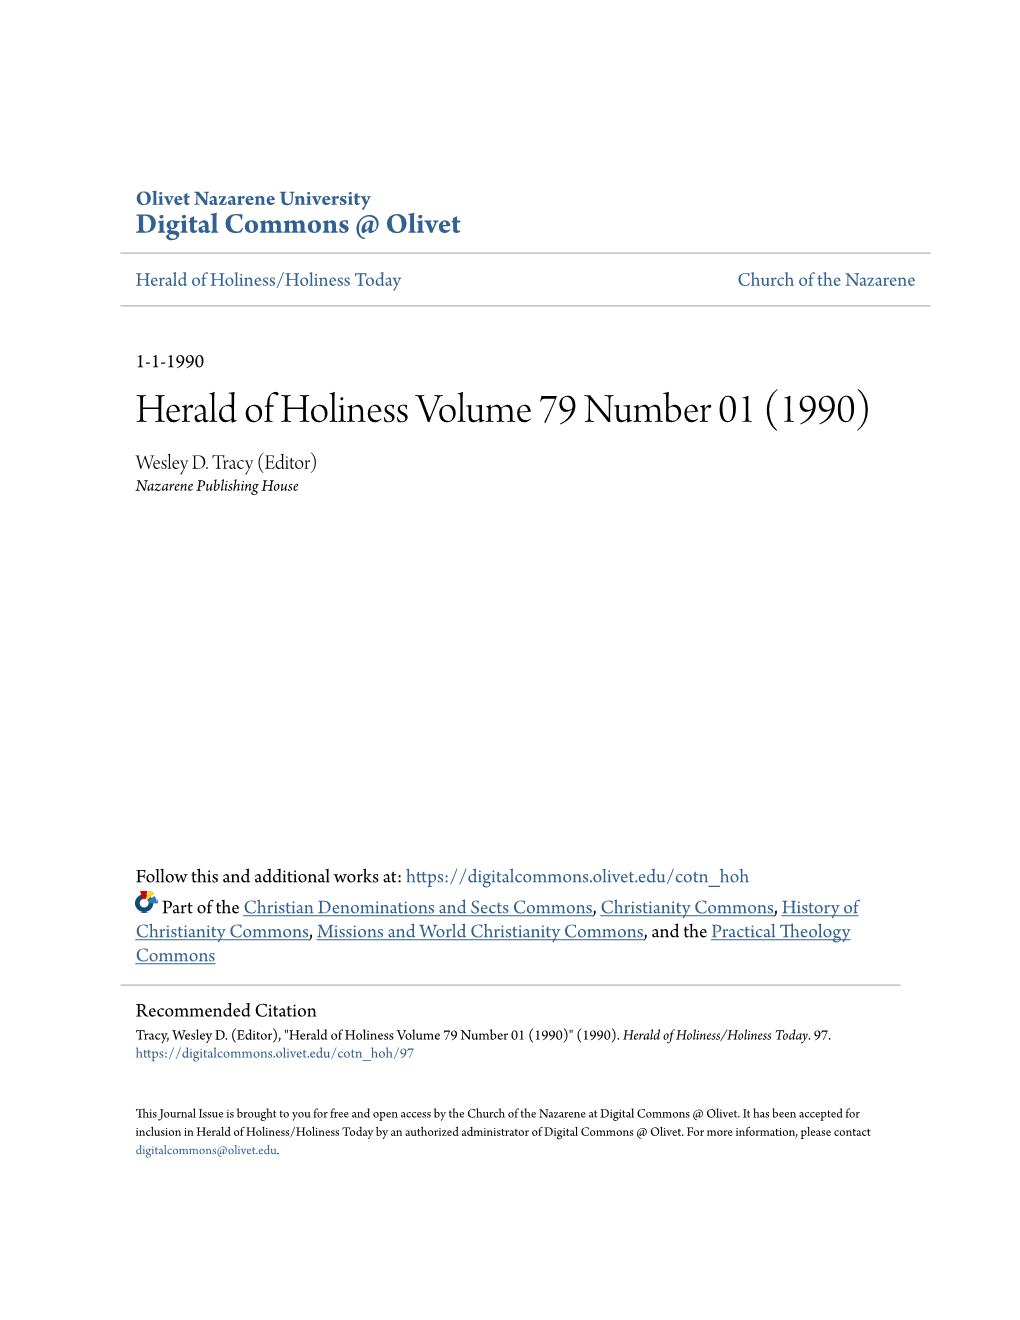 Herald of Holiness Volume 79 Number 01 (1990) Wesley D